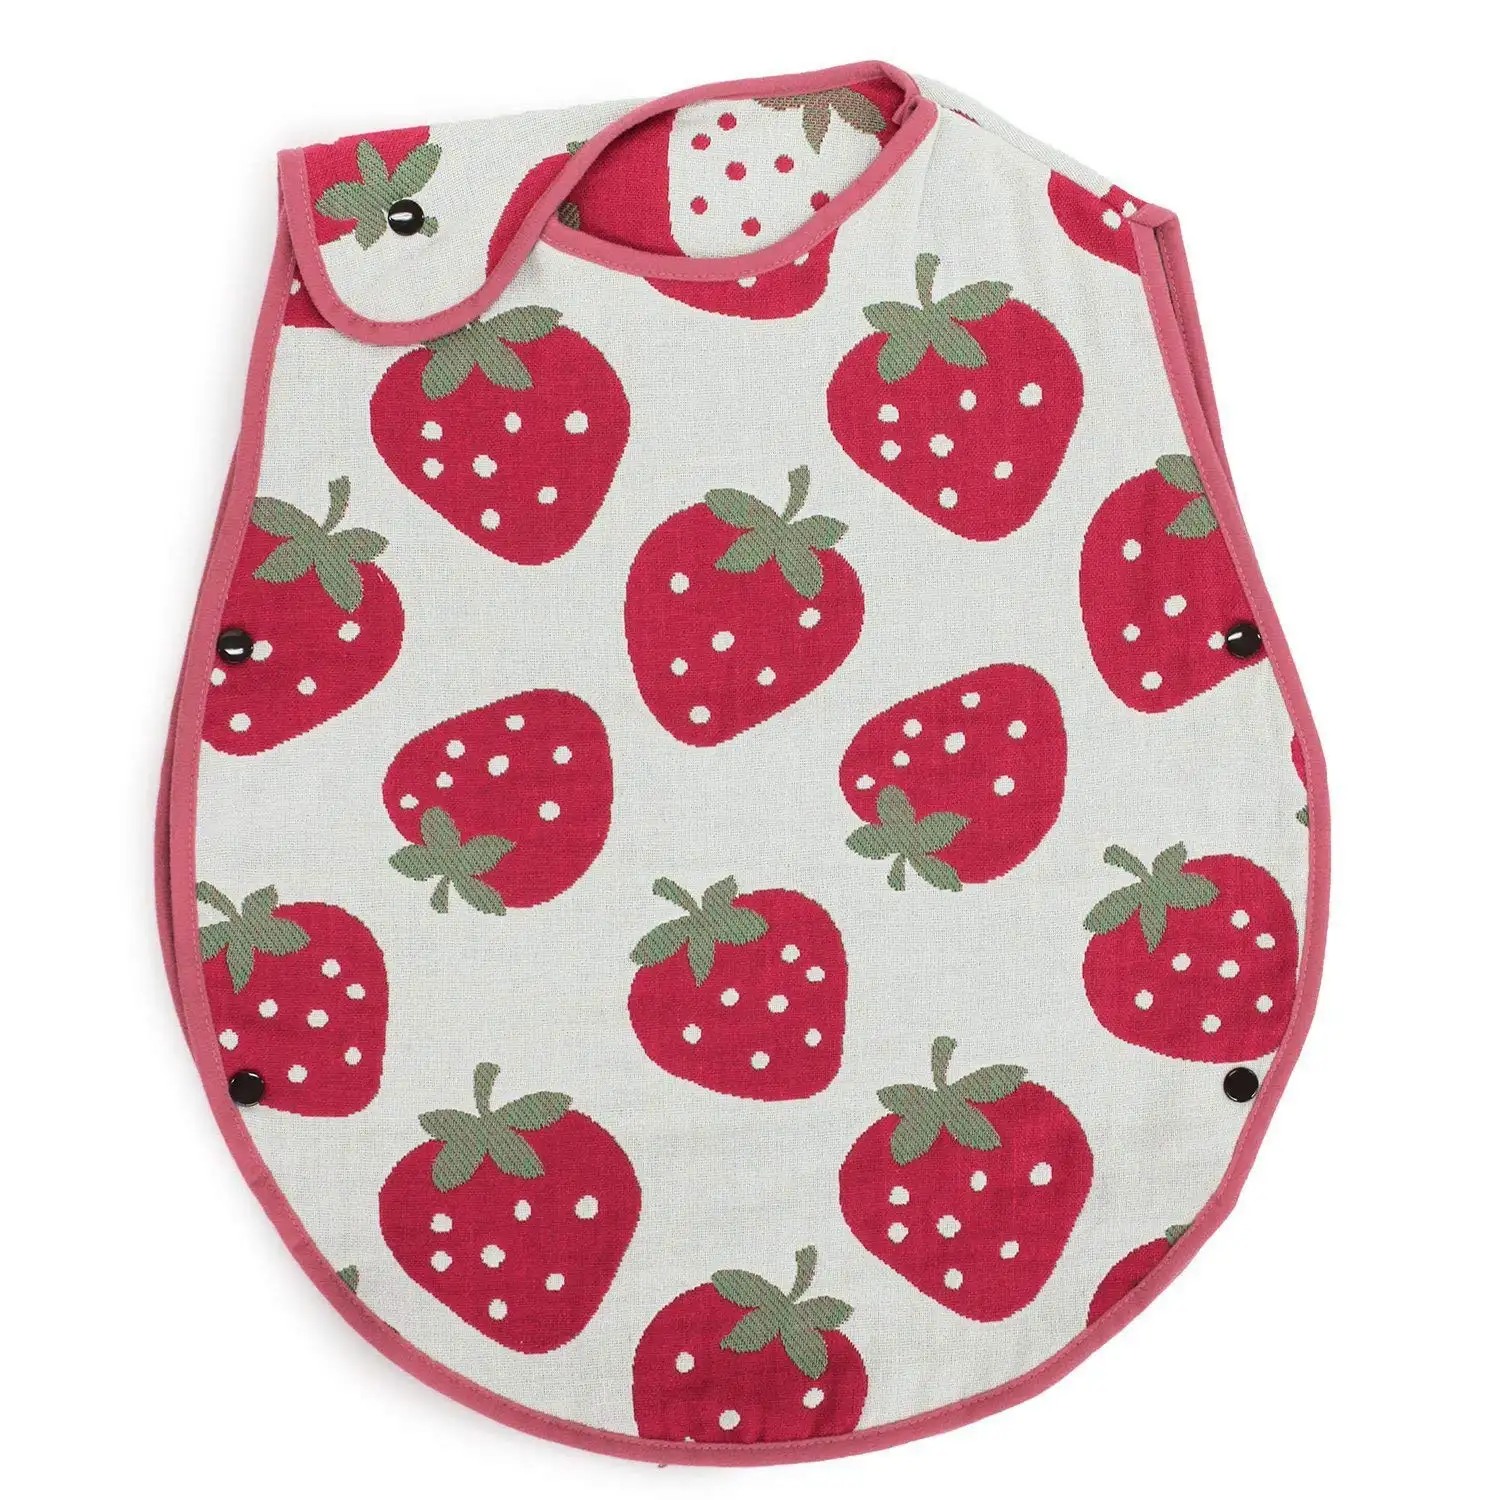 5 layer gauze baby sleeper. made in Japan cotton 100% baby sleepsack strawberry design